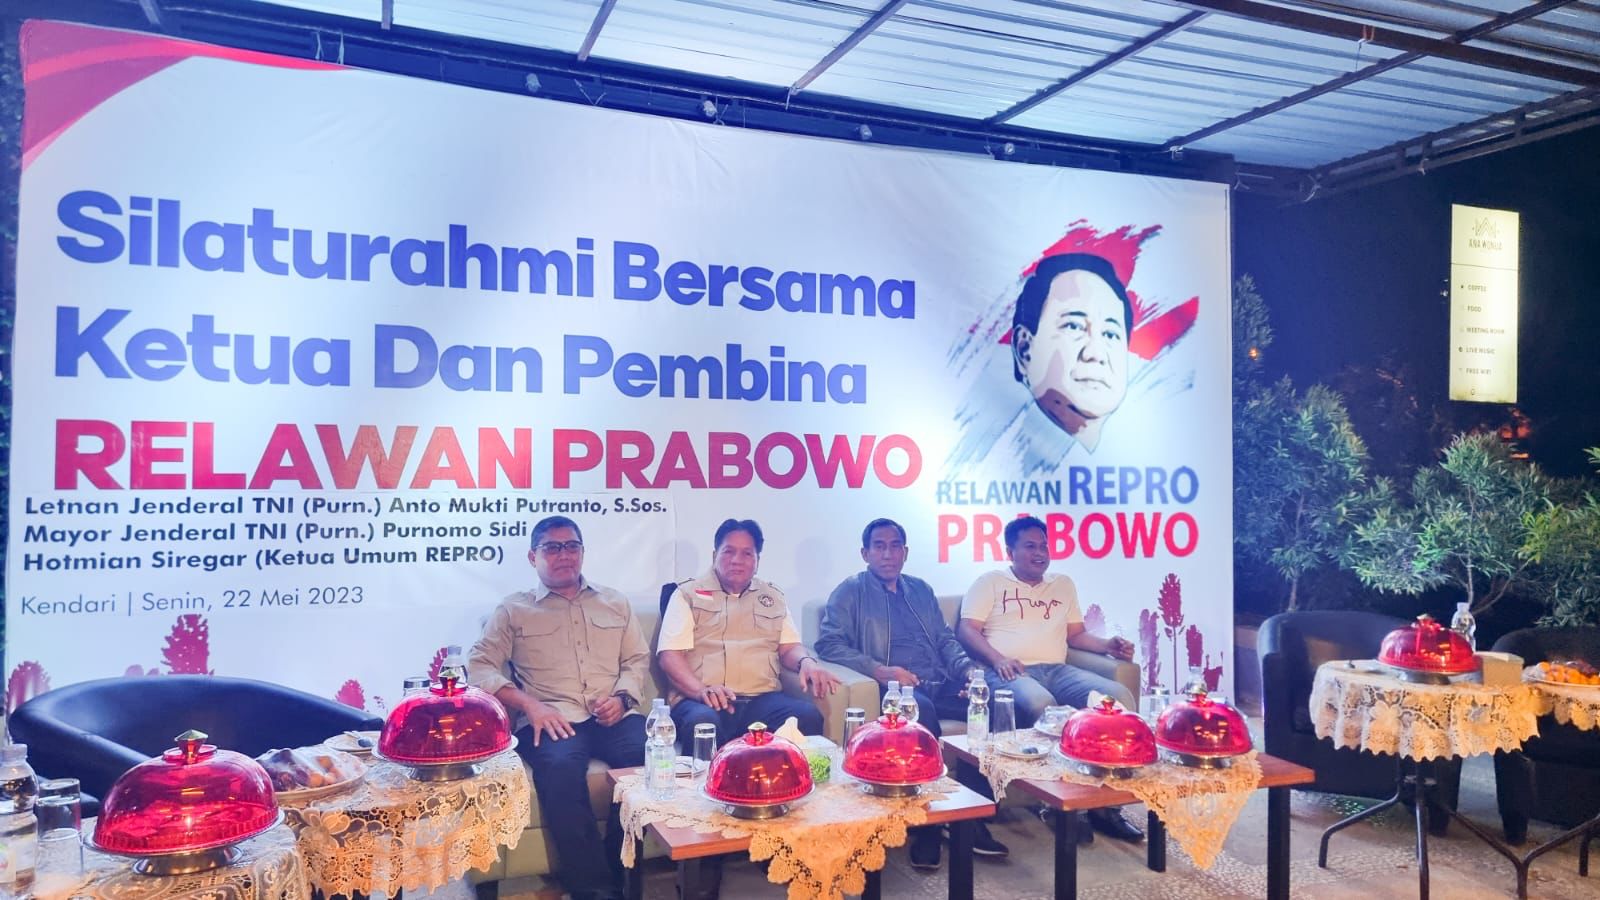 Repro menggelar deklarasi Menhan Prabowo Subianto untuk Pemilihan Presiden (Pilpres) 2024 di RM Kampong Bakau, Sulawesi Tenggara (Sultra) pada Senin, 22 Mei 2023. (SinPo.id/Dok. Repro)